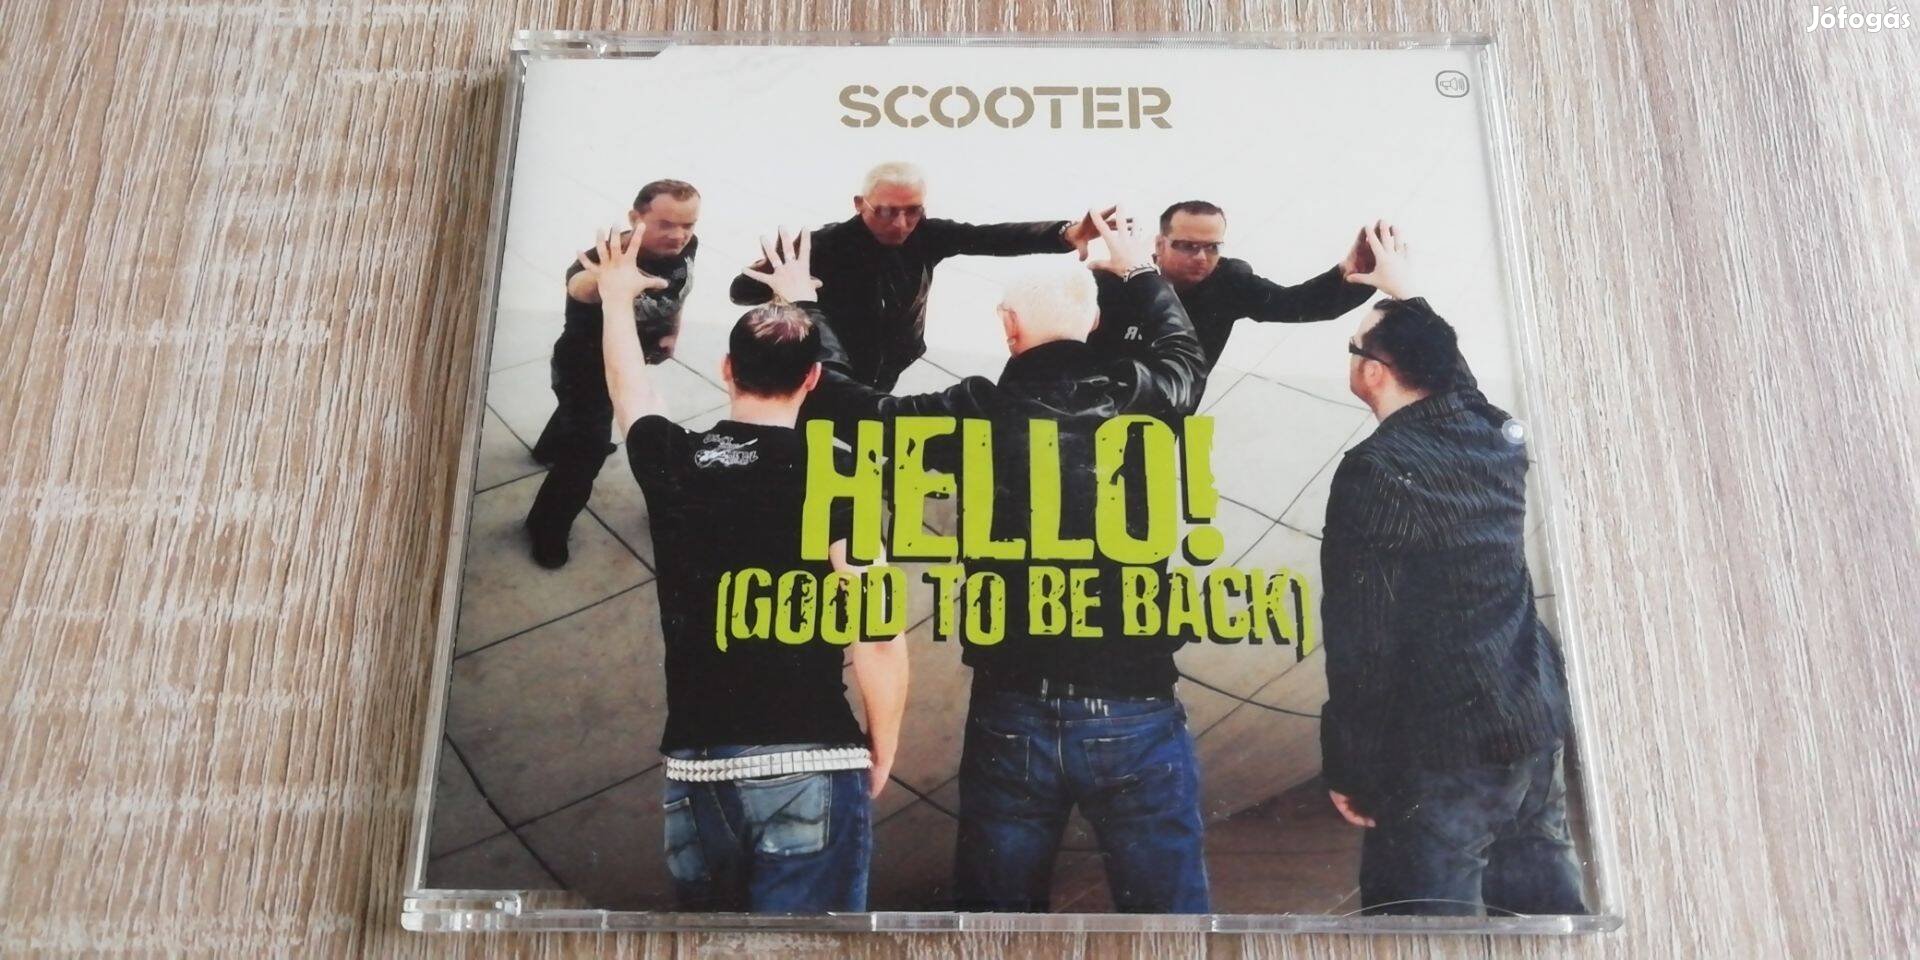 Scooter: Hello! (Good to be Back) - eredeti CD, újszerű, karcmentes